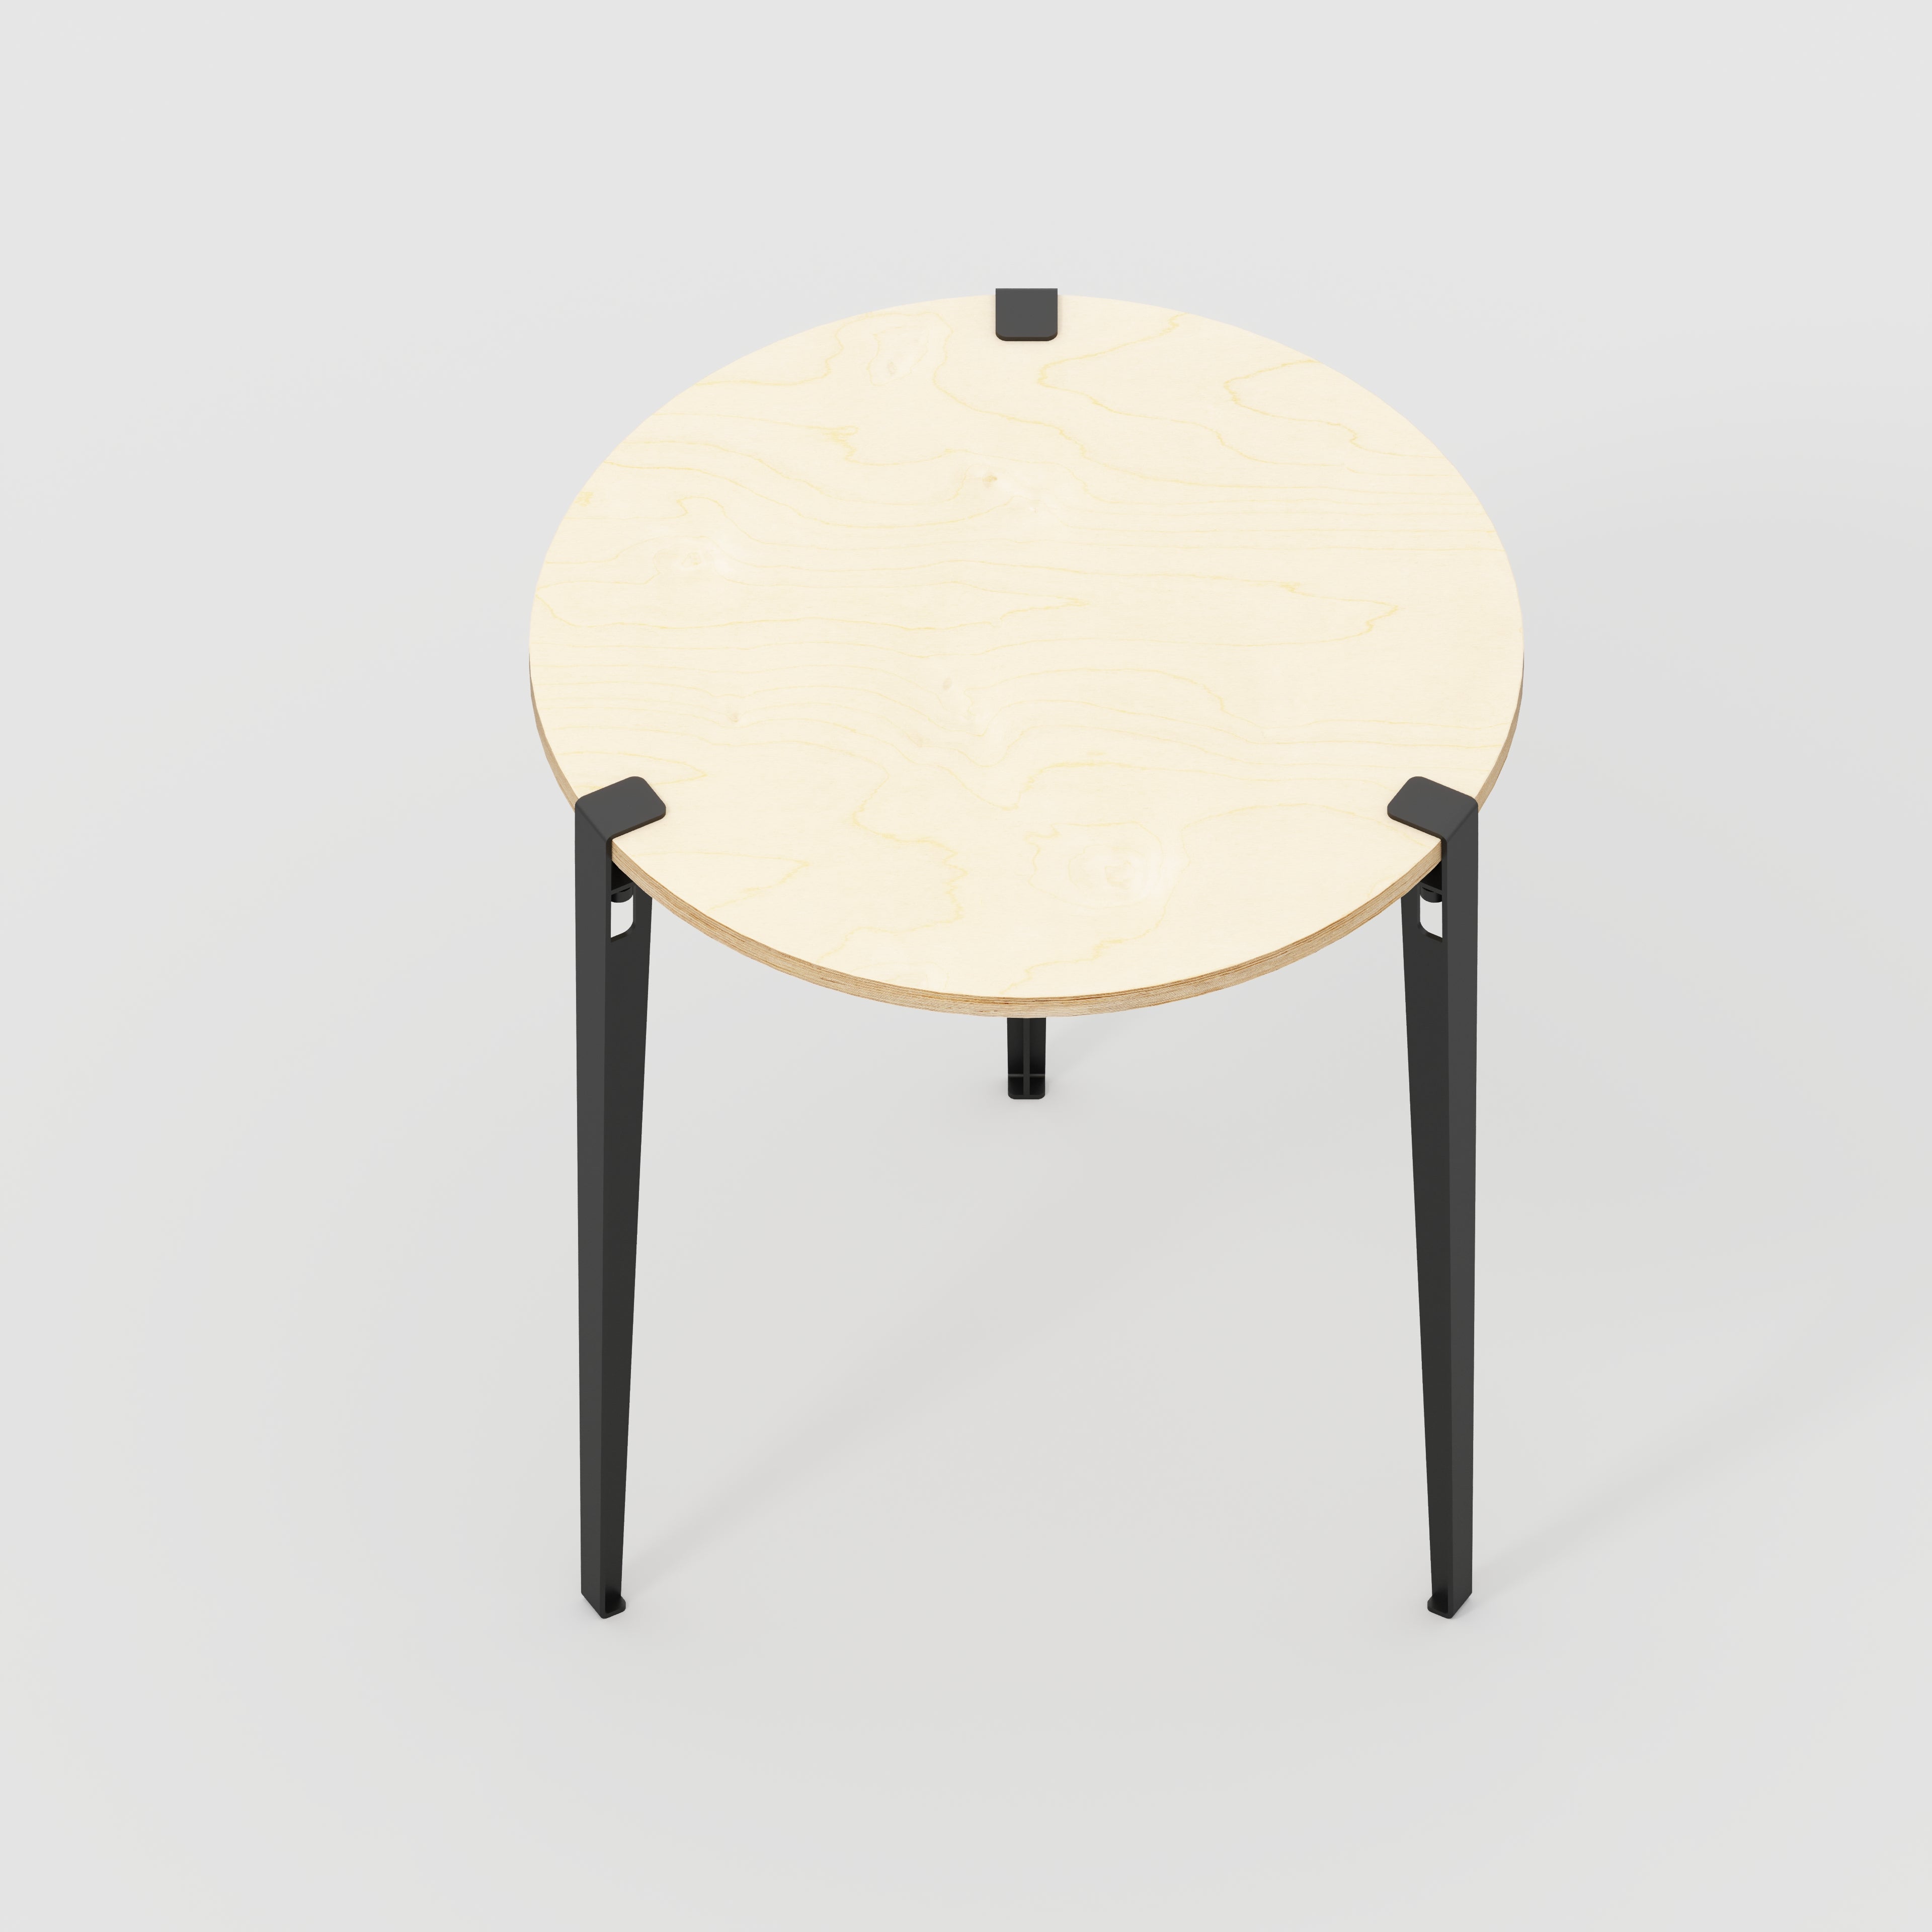 Round Table with Black Tiptoe Legs - Plywood Birch - 800(dia) x 900(h)